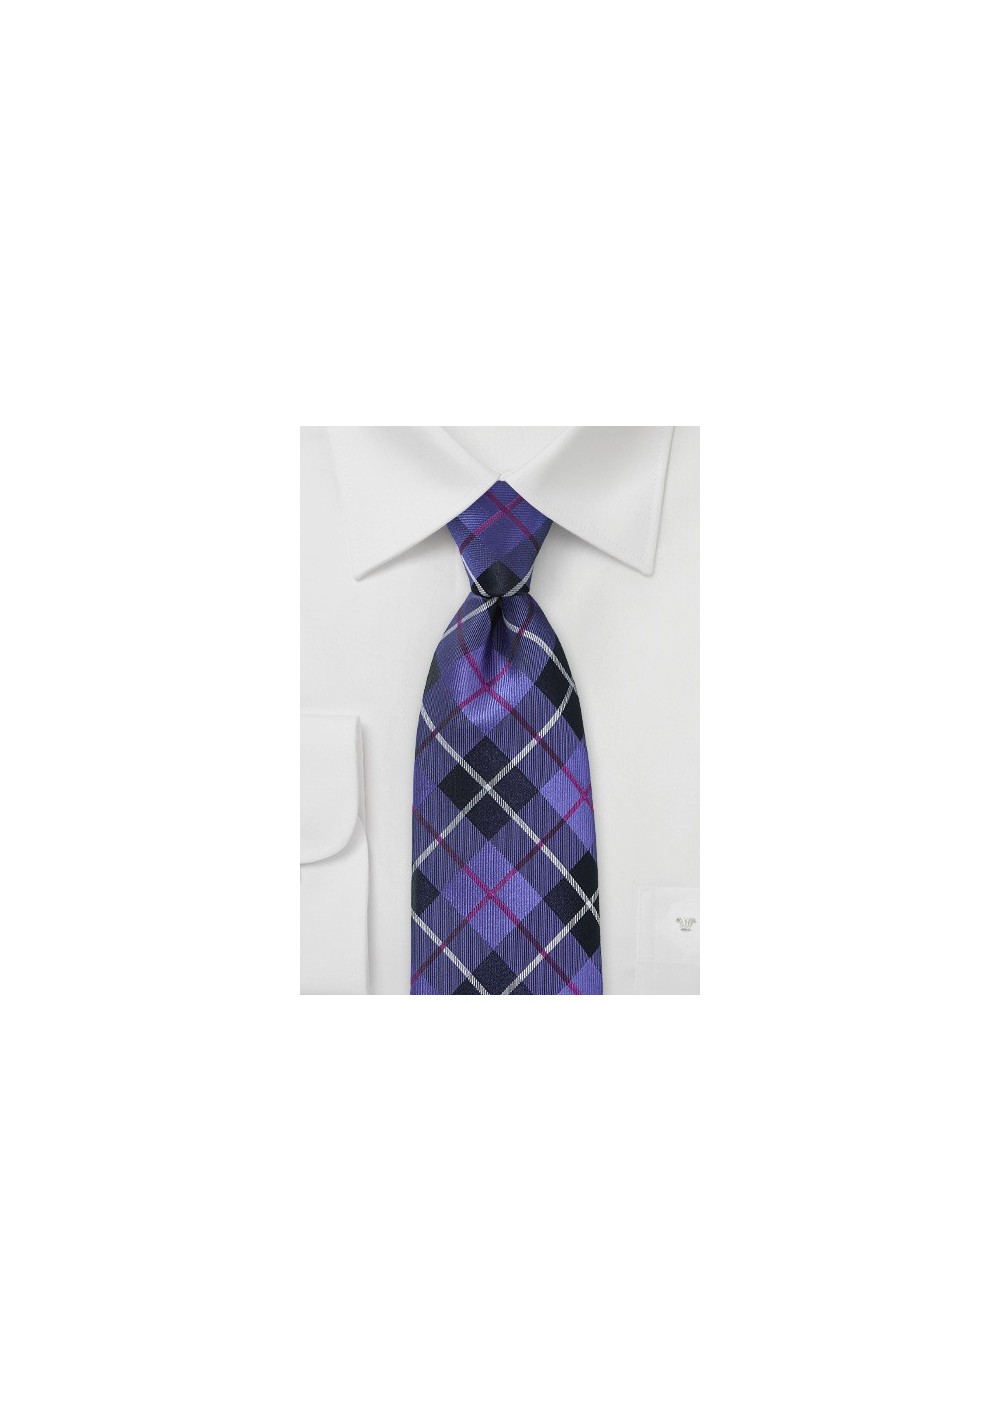 Plaid Tie in Electric Purple and Fuchsia